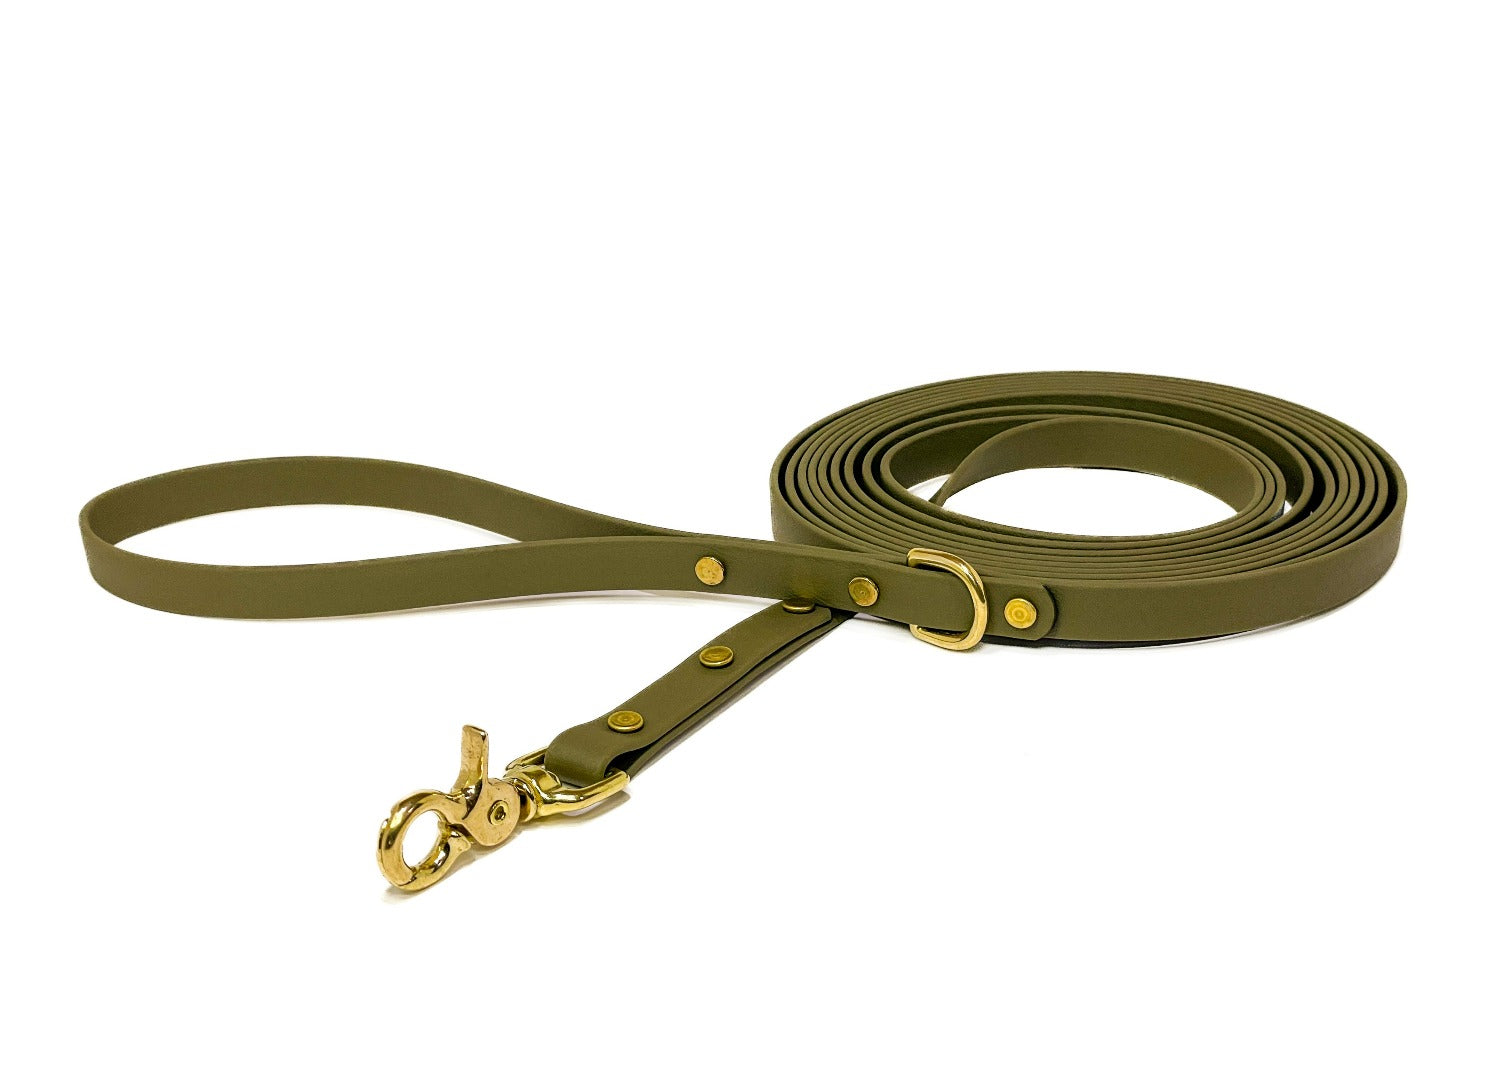 Backwoods Dog BioThane waterproof long lead long leash in olive with brass hardware